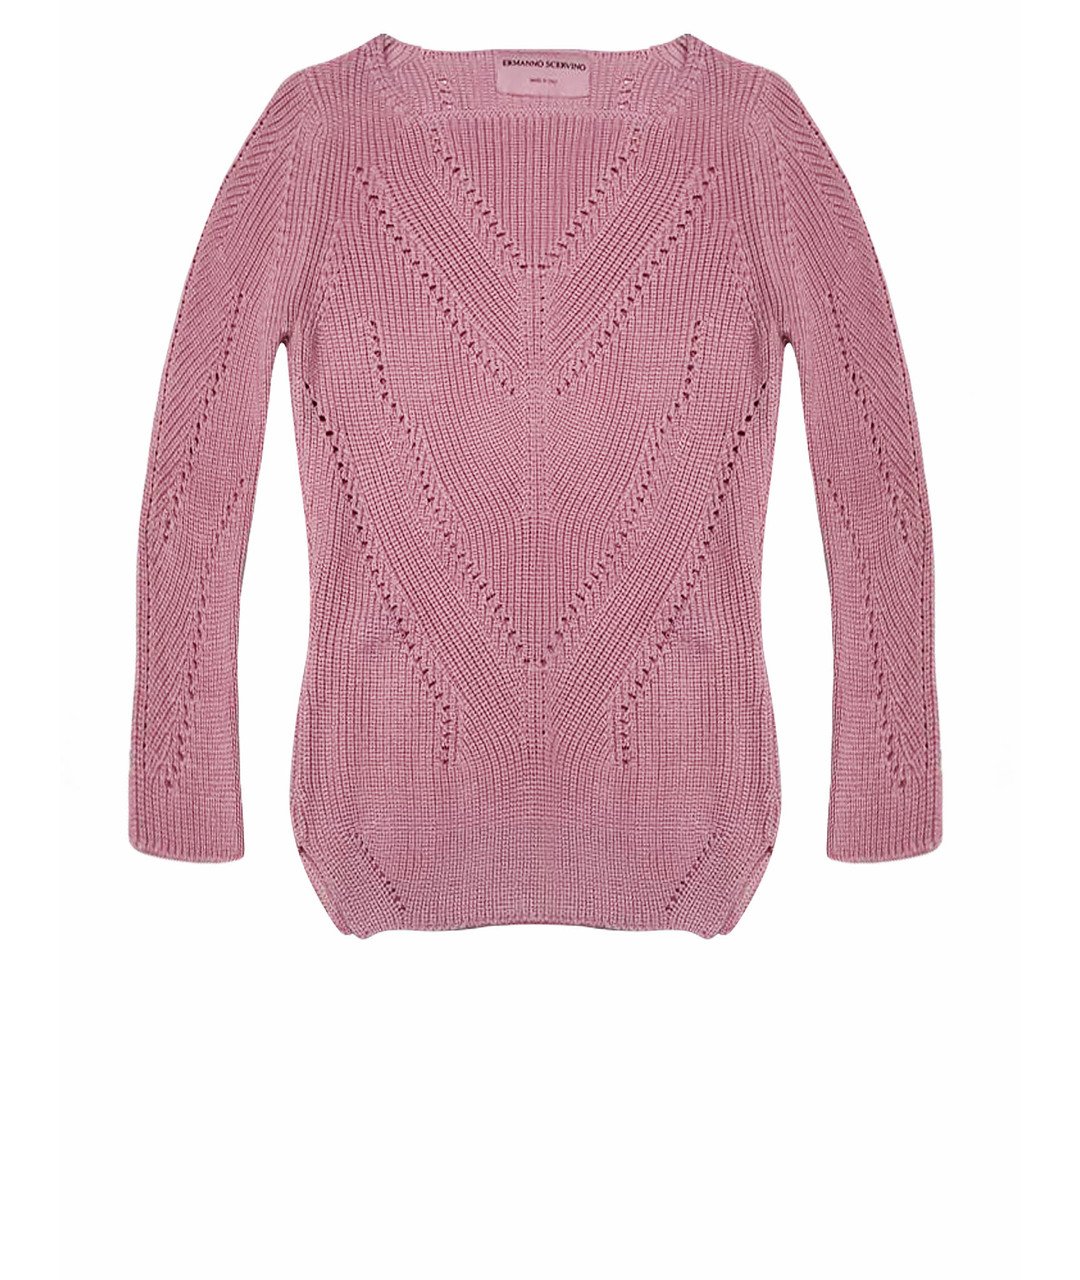 ERMANNO SCERVINO Розовый джемпер / свитер, фото 1